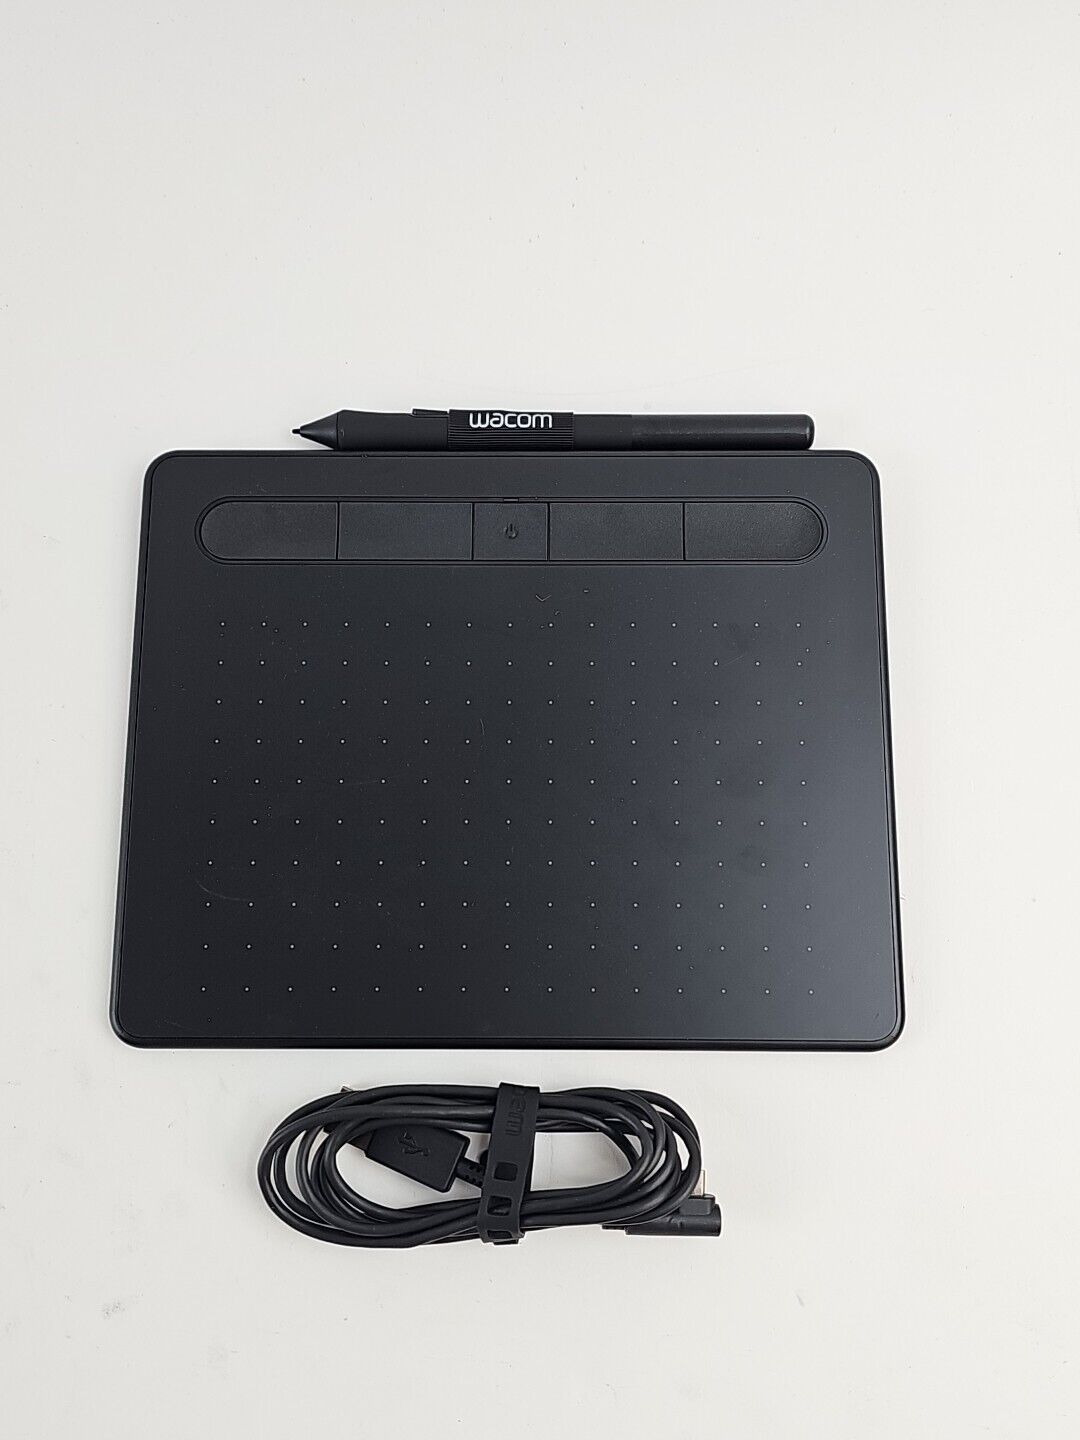 Wacom Intuos Wireless Drawing Graphics Tablet - Black, Model CTL-4100WL